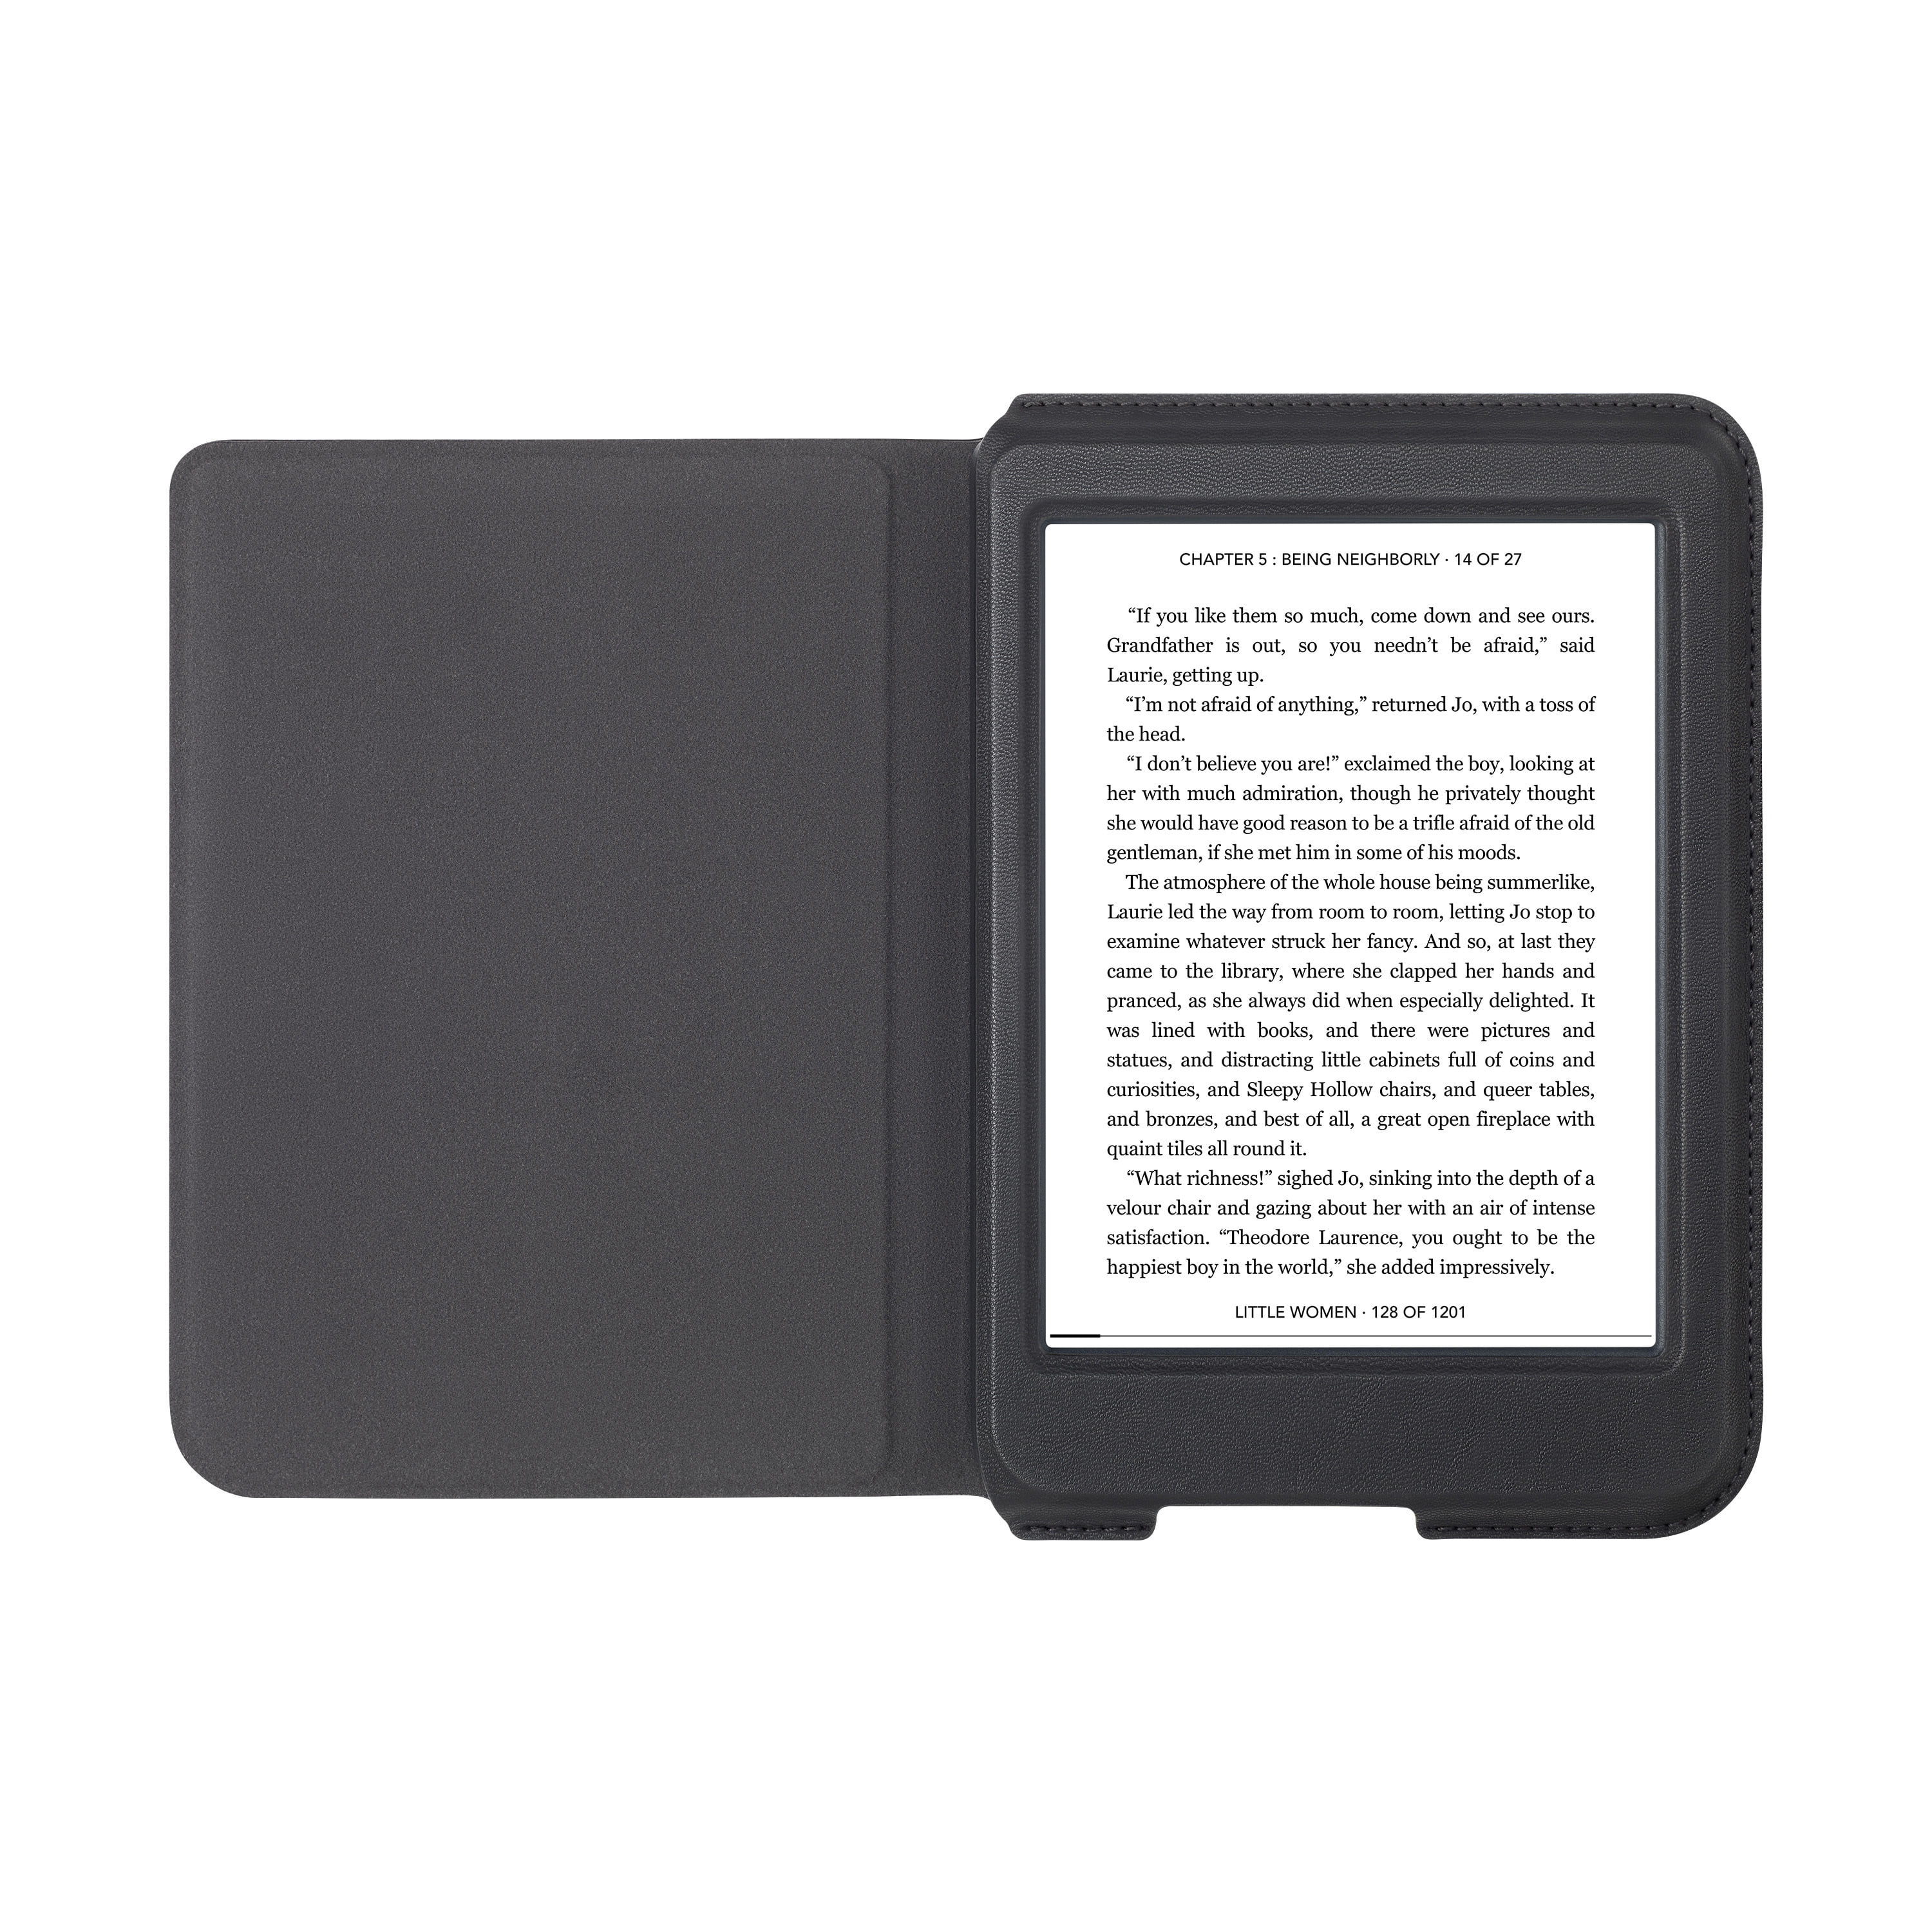  Cases Compatible with Kobo Nia E-Reader Sleep Cover